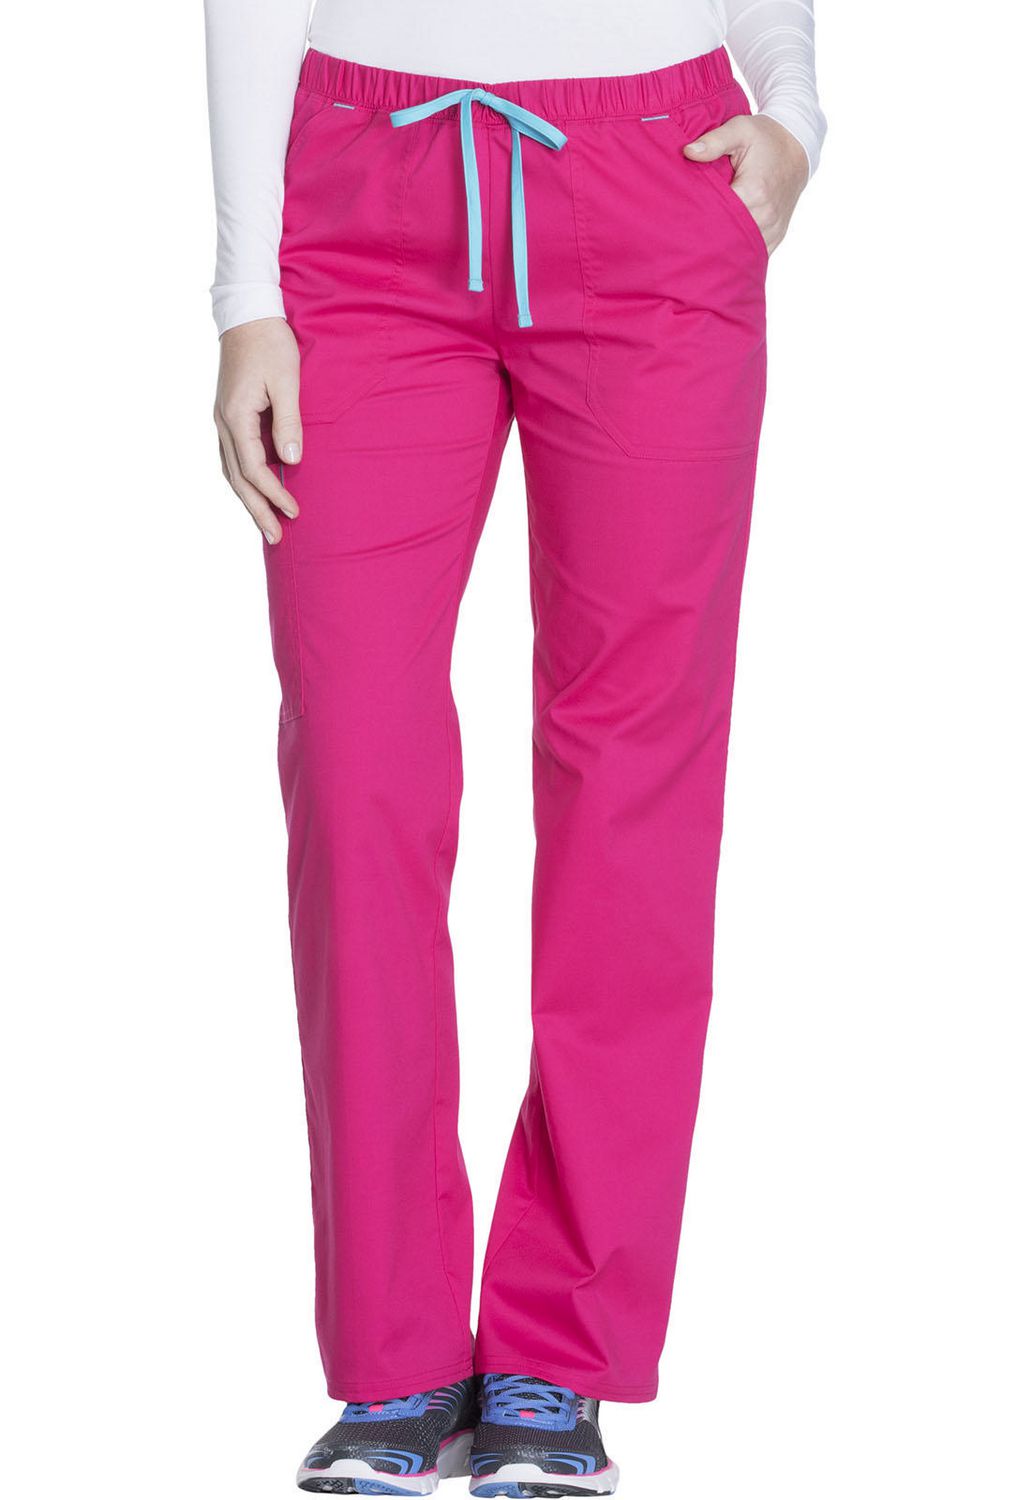 Scrubstar Women's Fashion Collection Seasonal Solid Pants | Walmart Canada